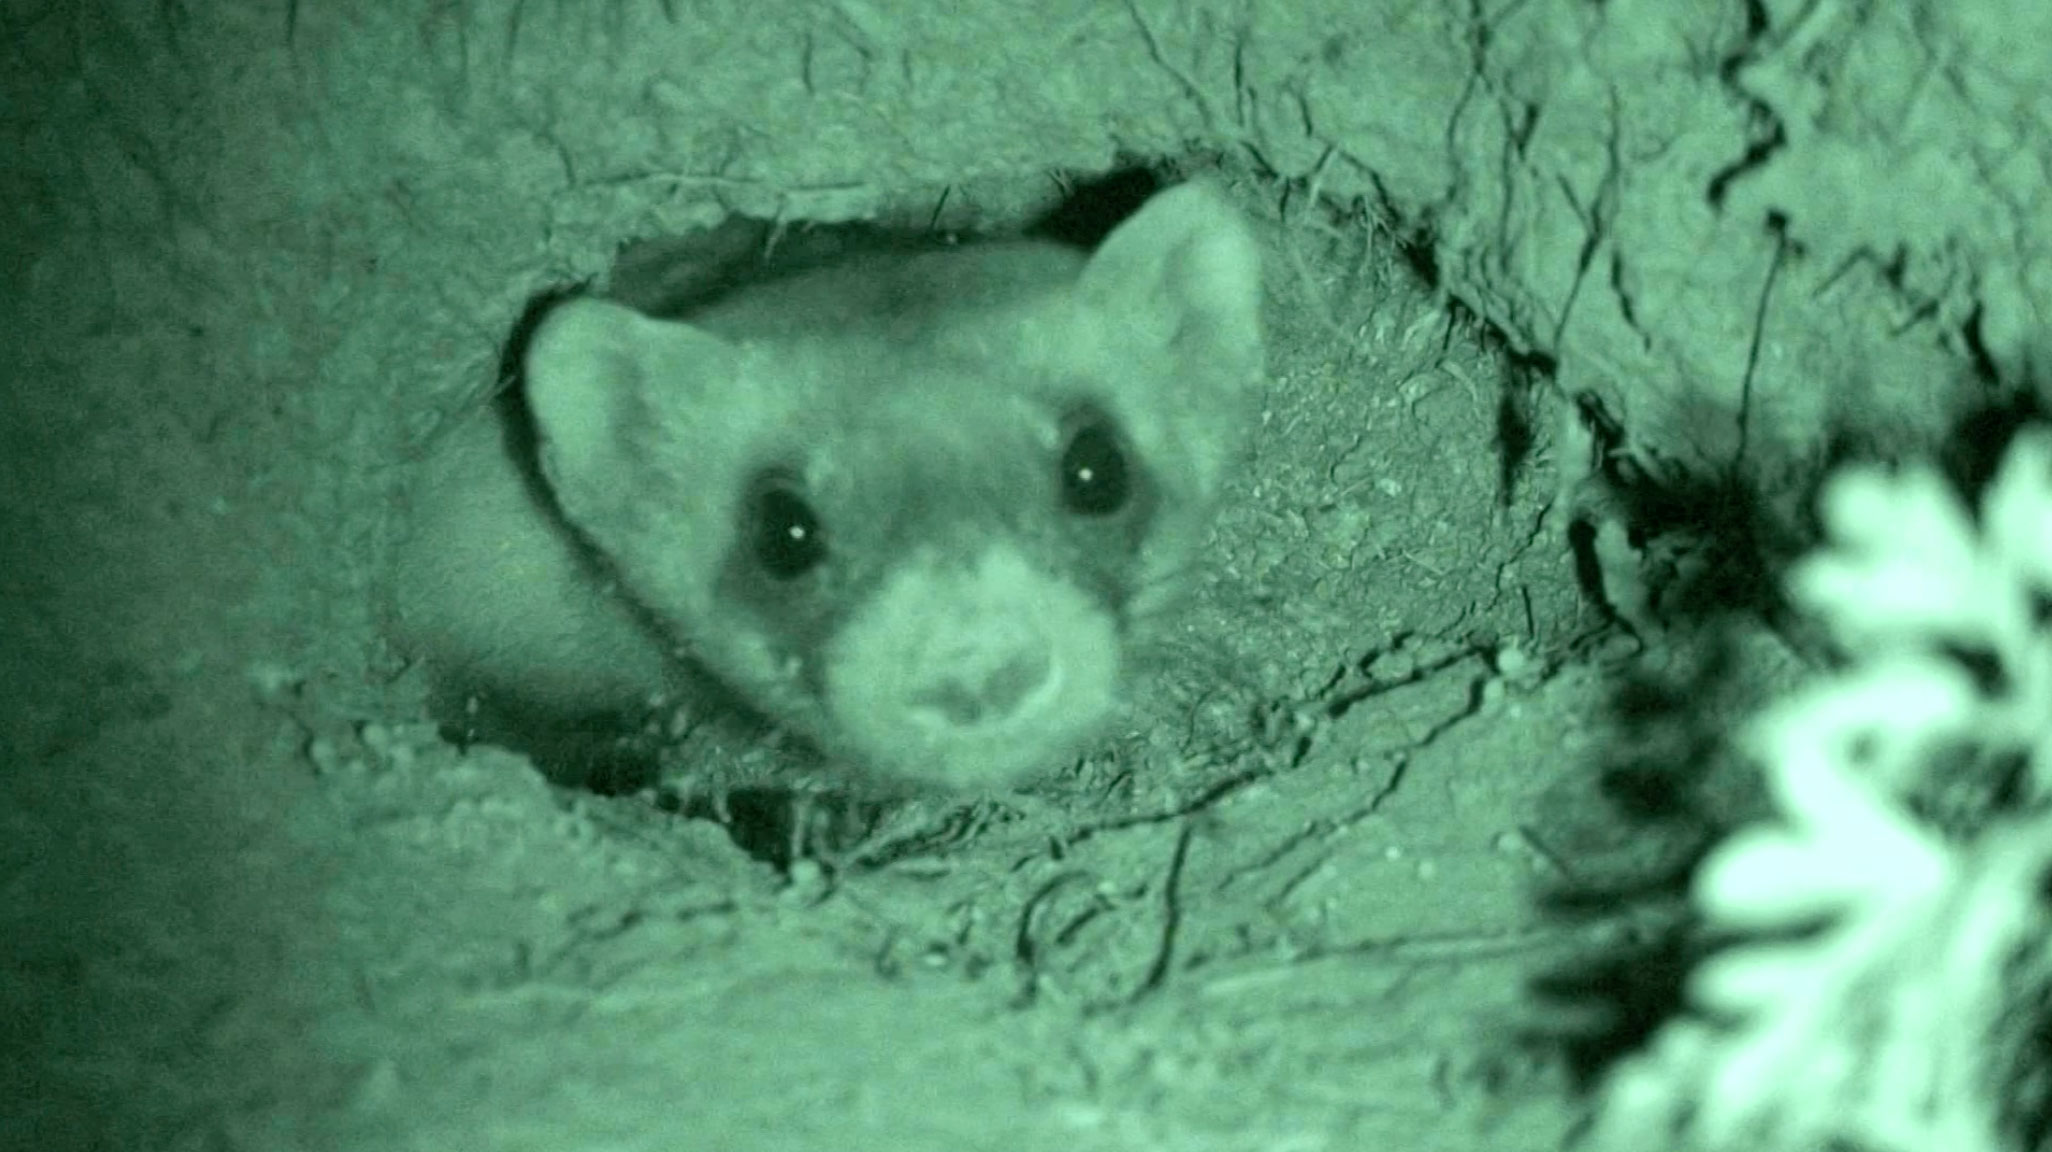 A ferret in a burrow